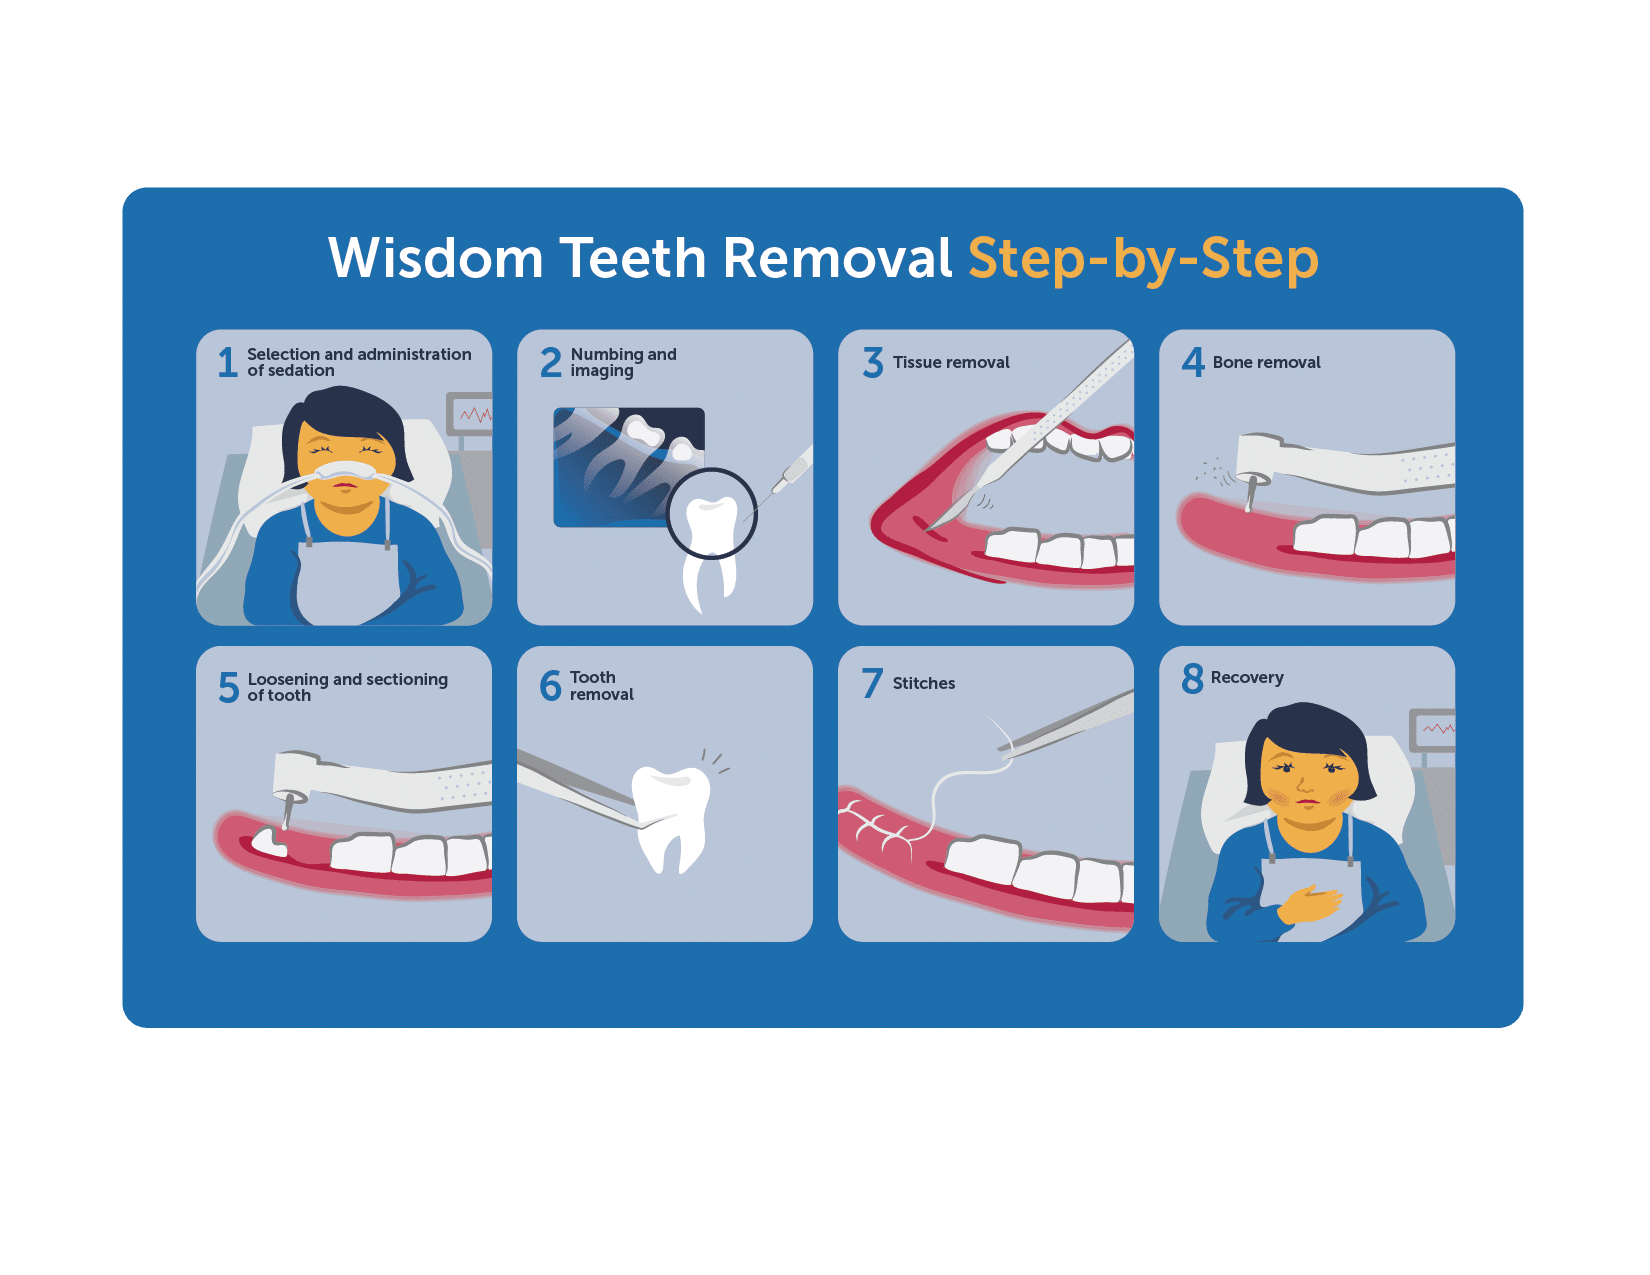 Process of wisdom teeth removal